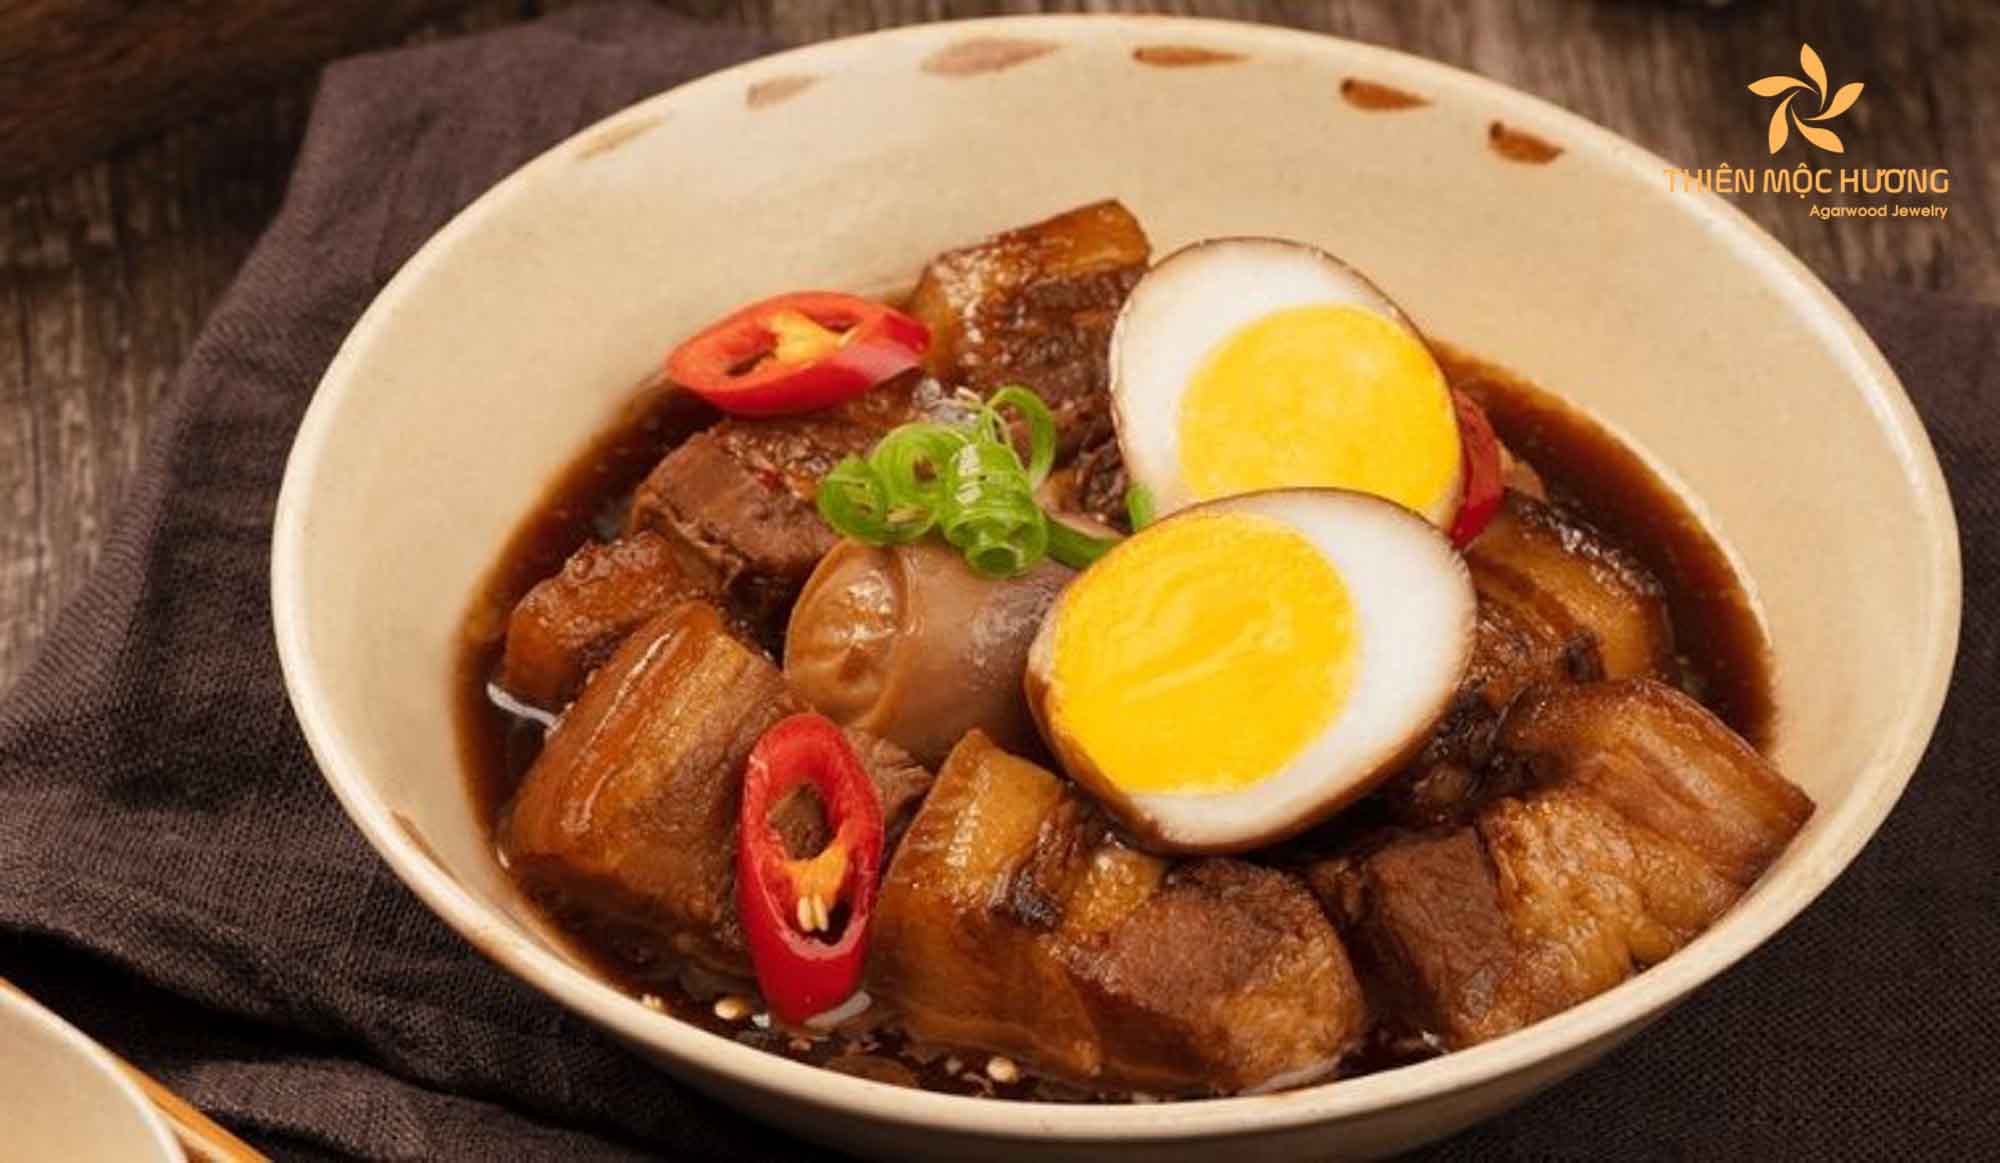 Lunar new year food vietnamese - Braised pork with eggs